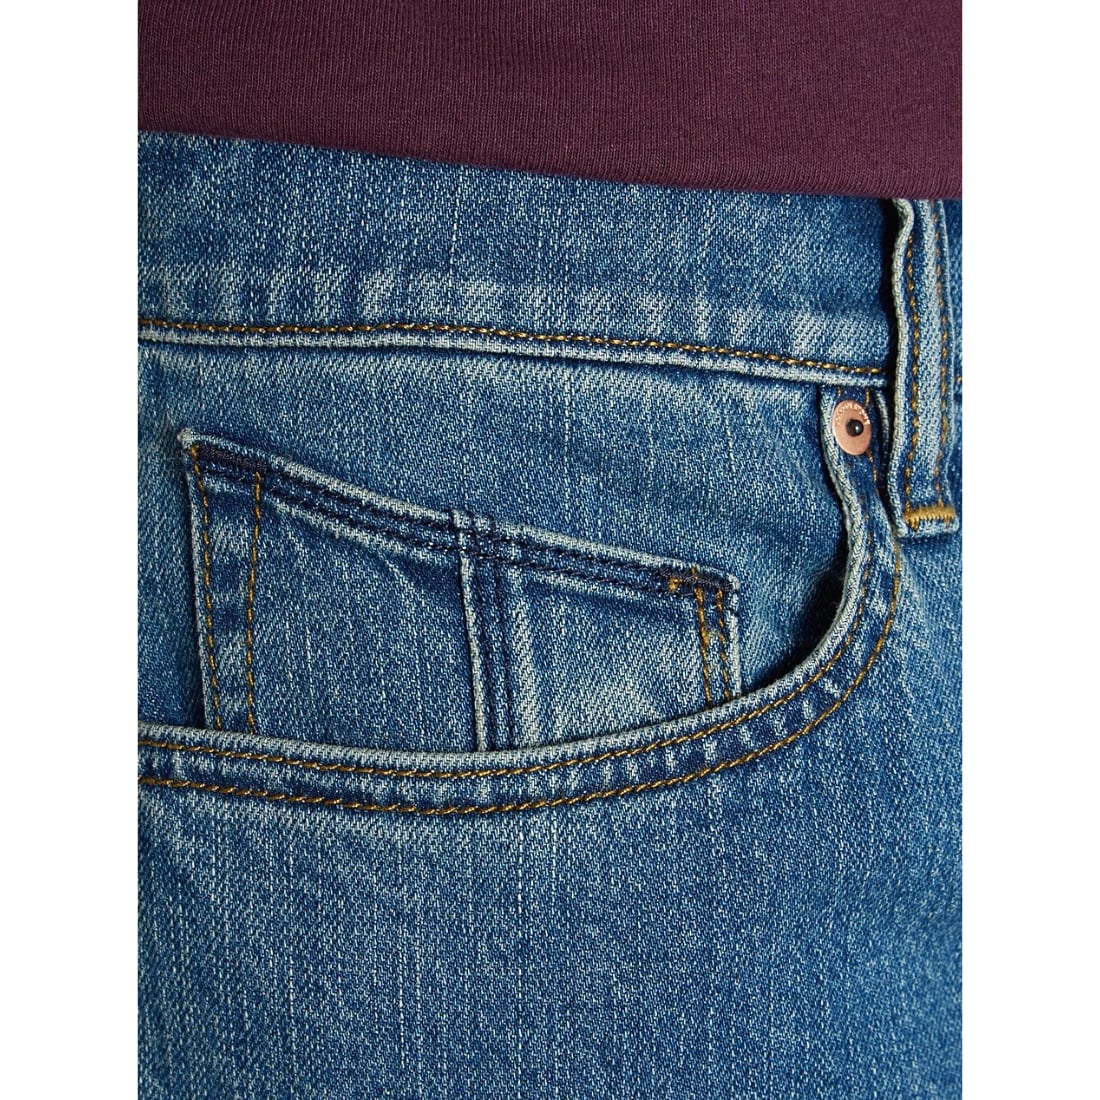 Volcom Solver Denim - Aged Indigo - Mens Regular/Straight Denim Jeans by Volcom